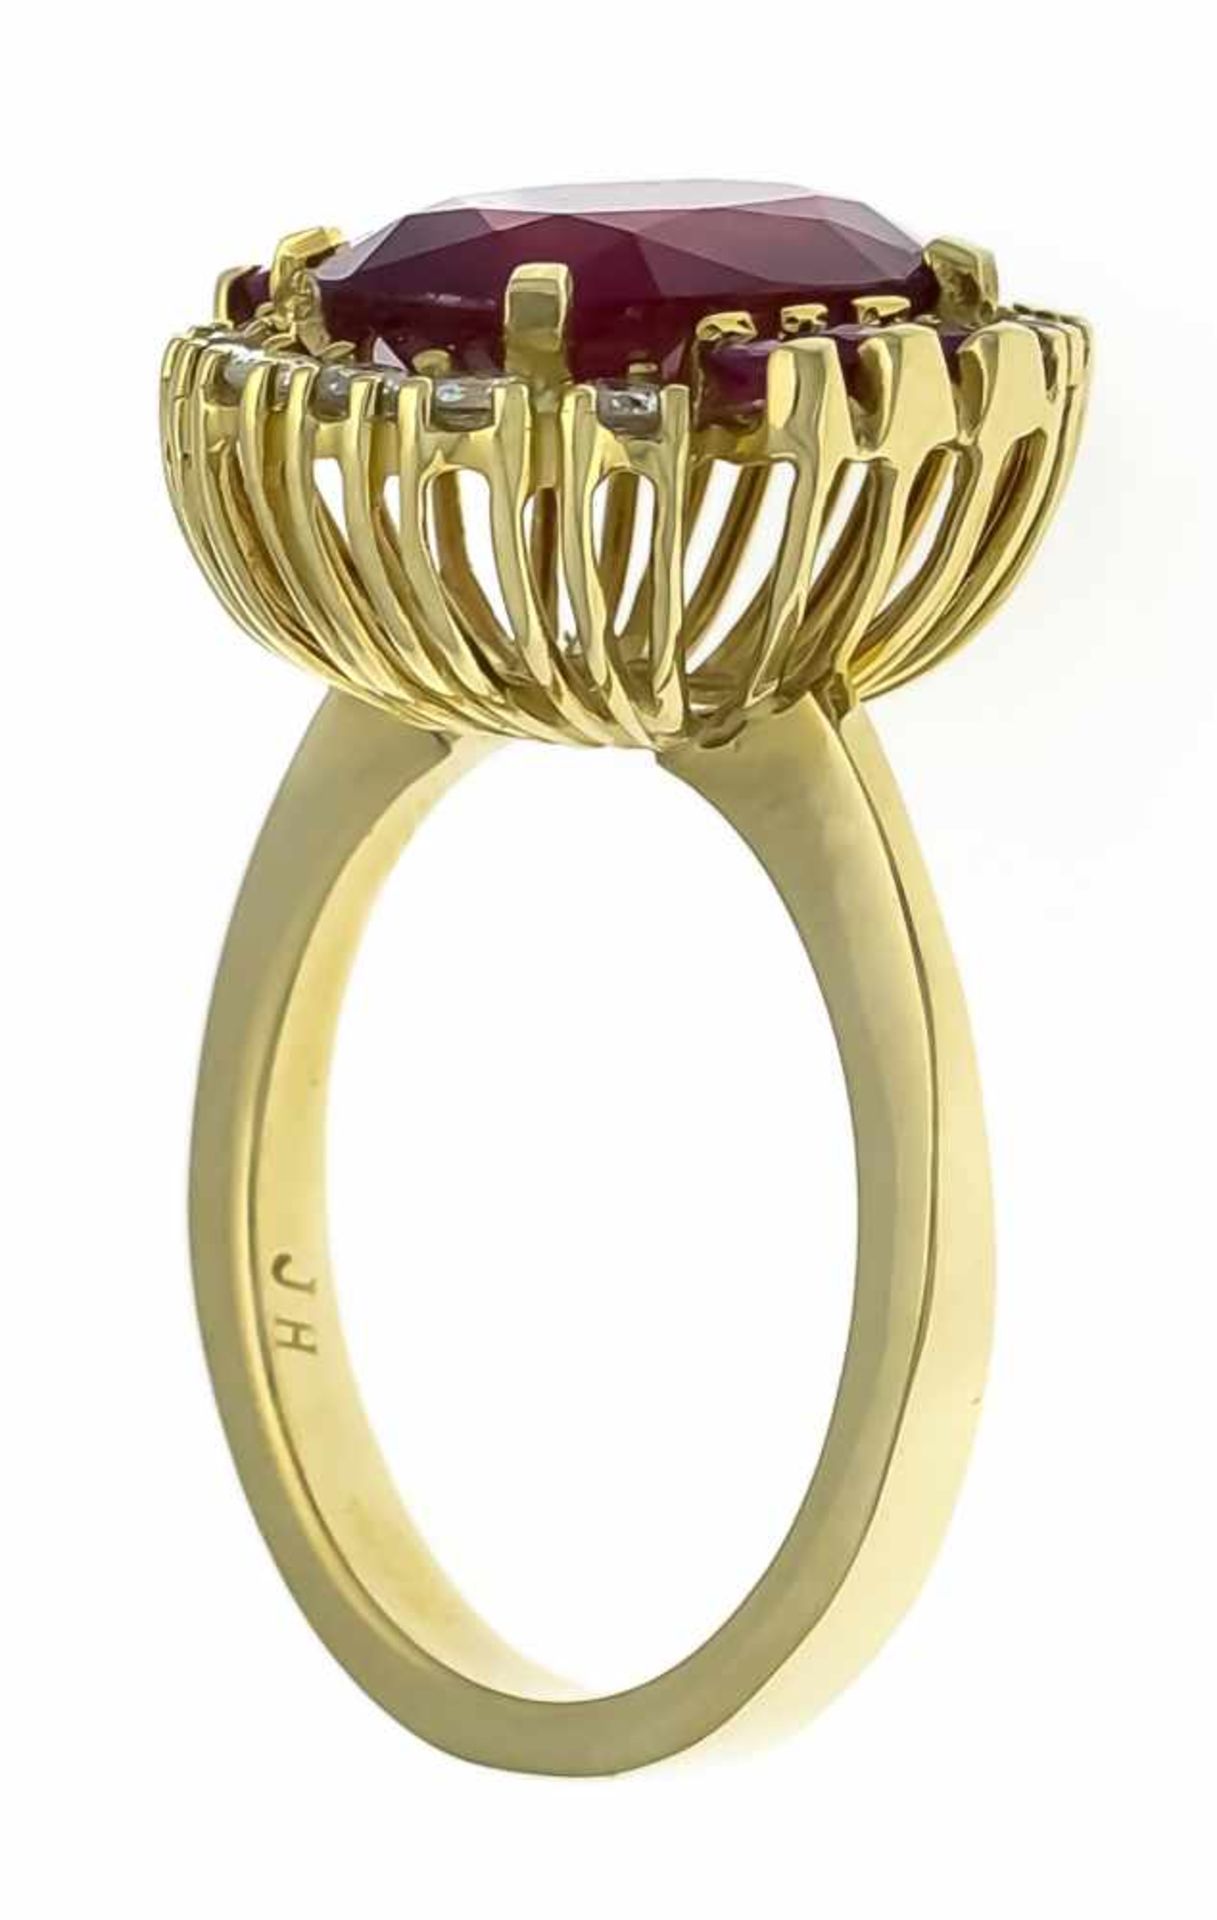 Rubin-Brillant-Ring GG 585/000 mit einem oval fac. Rubin 13,5 x 10 mm, 6 oval fac. Rubine3 mm, sowie - Bild 2 aus 3